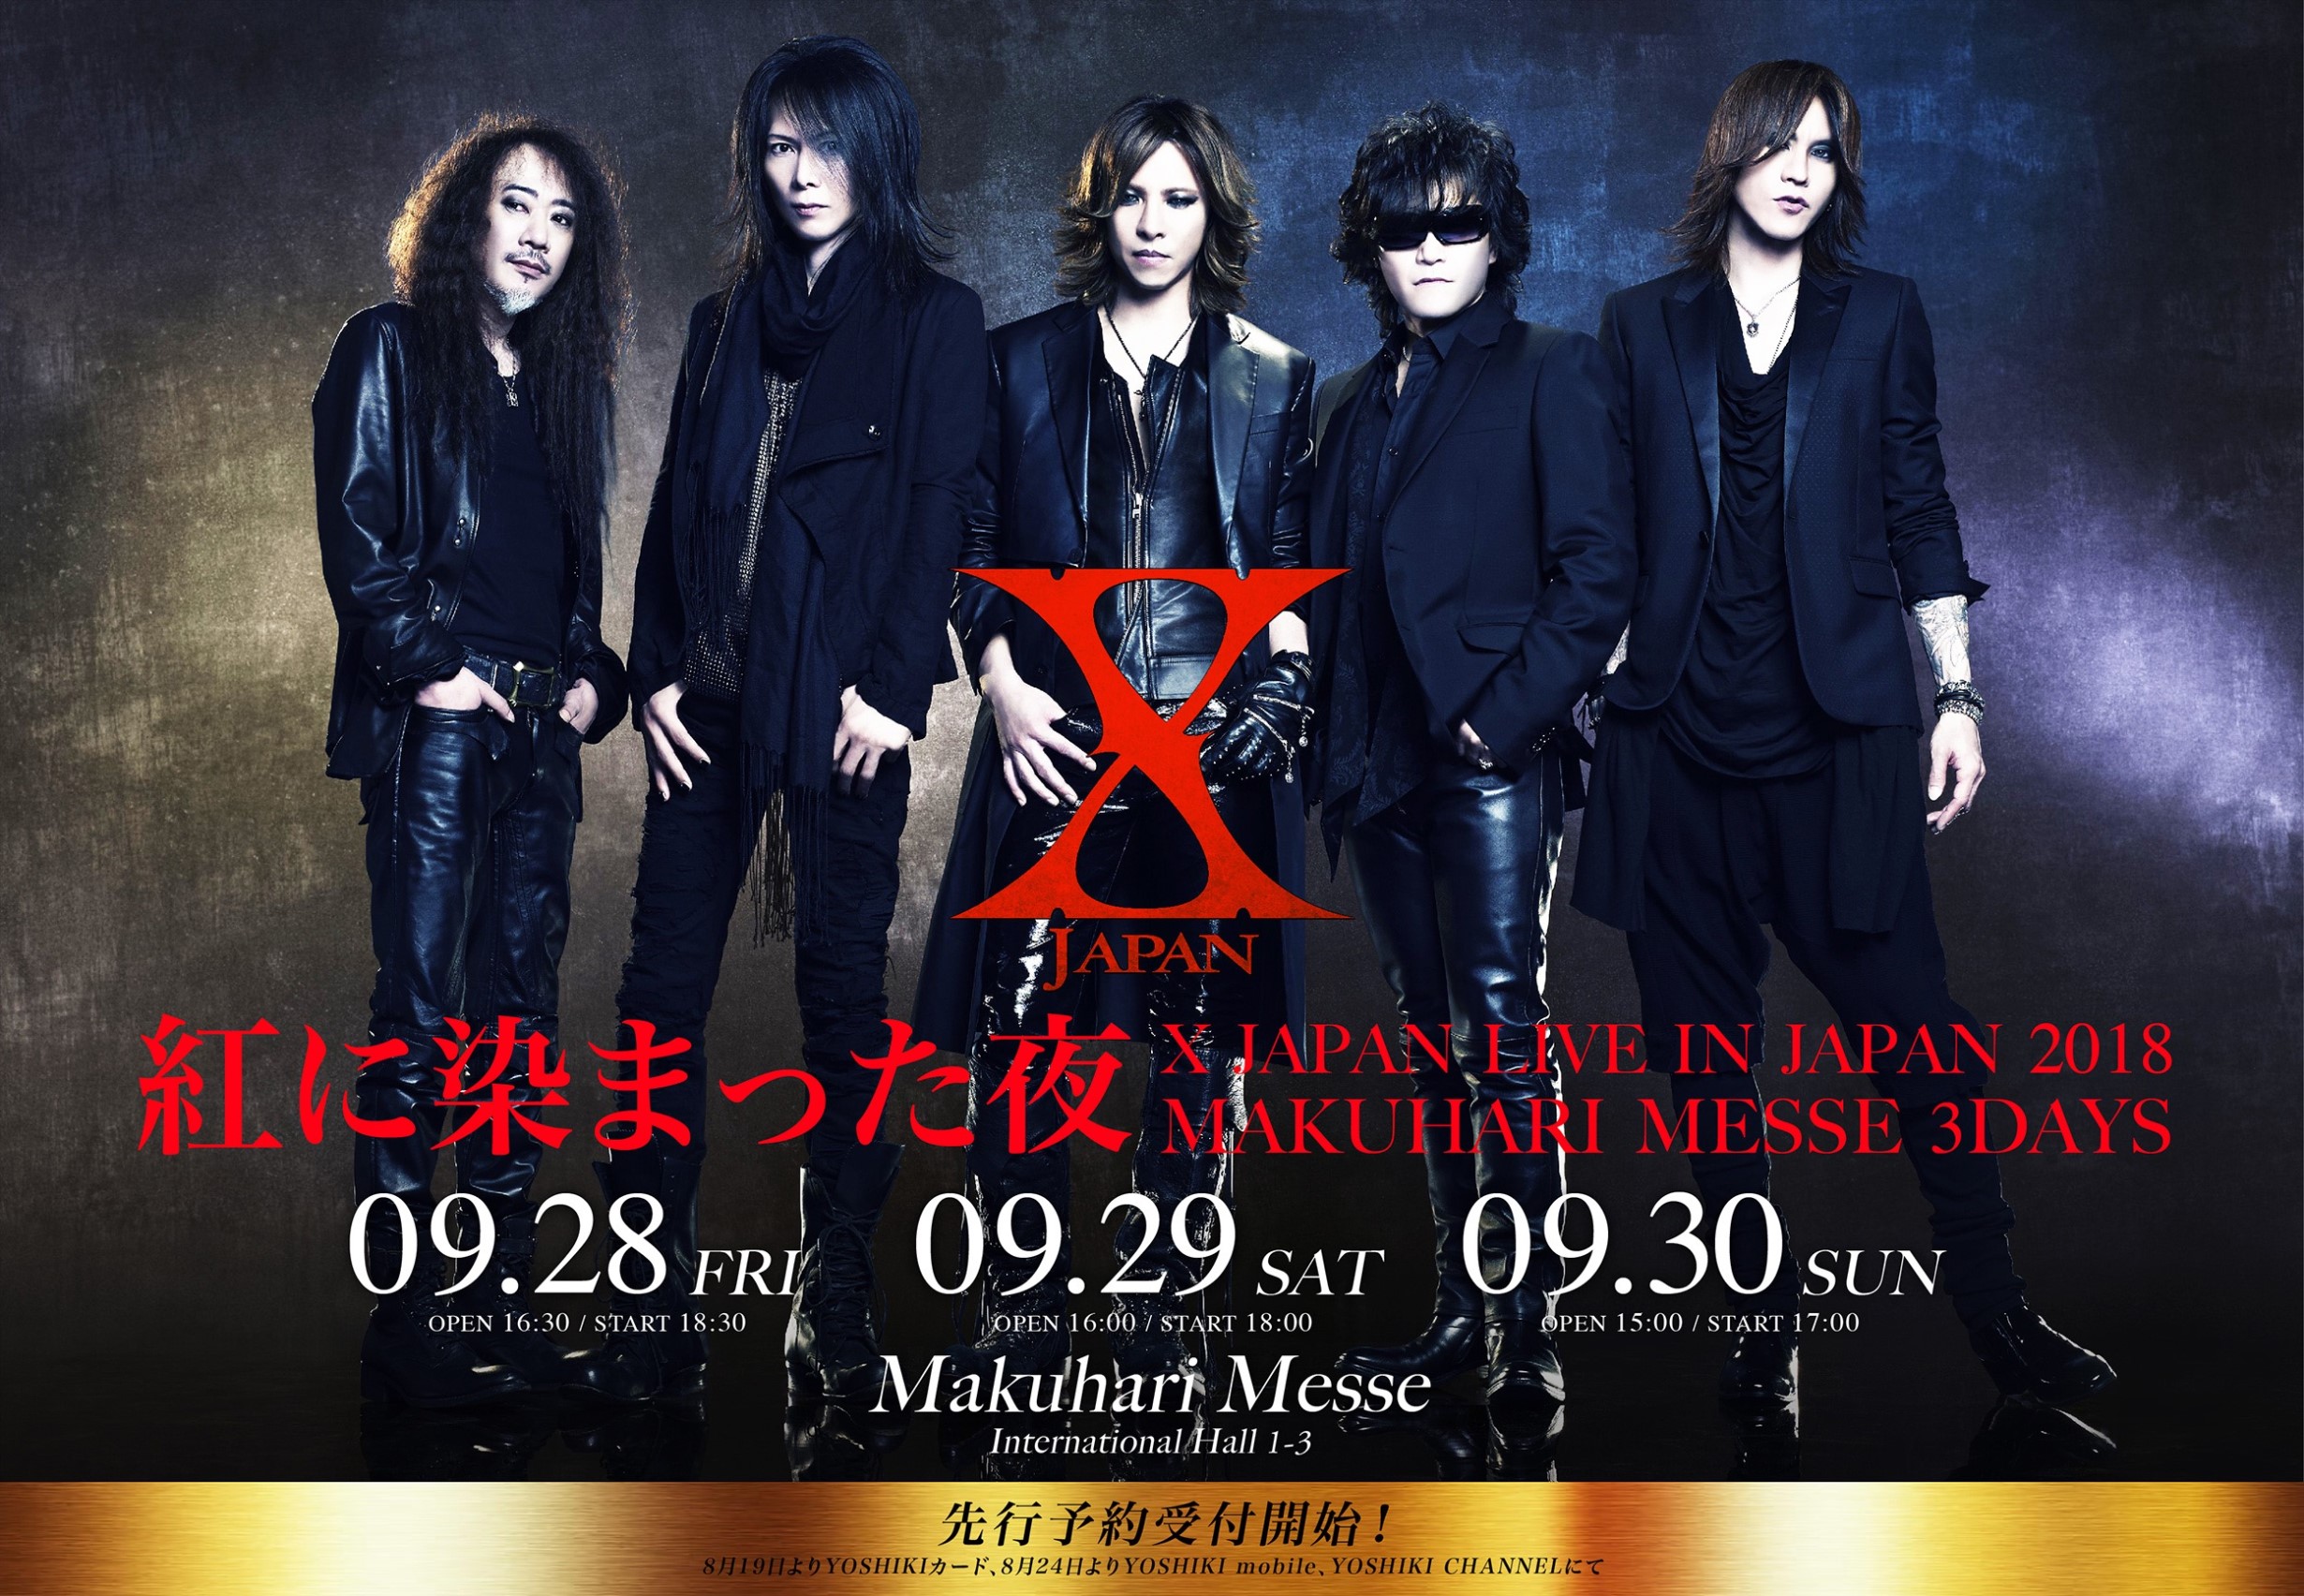 X Japan Live日本公演 18 紅に染まった夜 Makuhari Messe 3days 開催決定 Yoshiki Pr事務局のプレスリリース